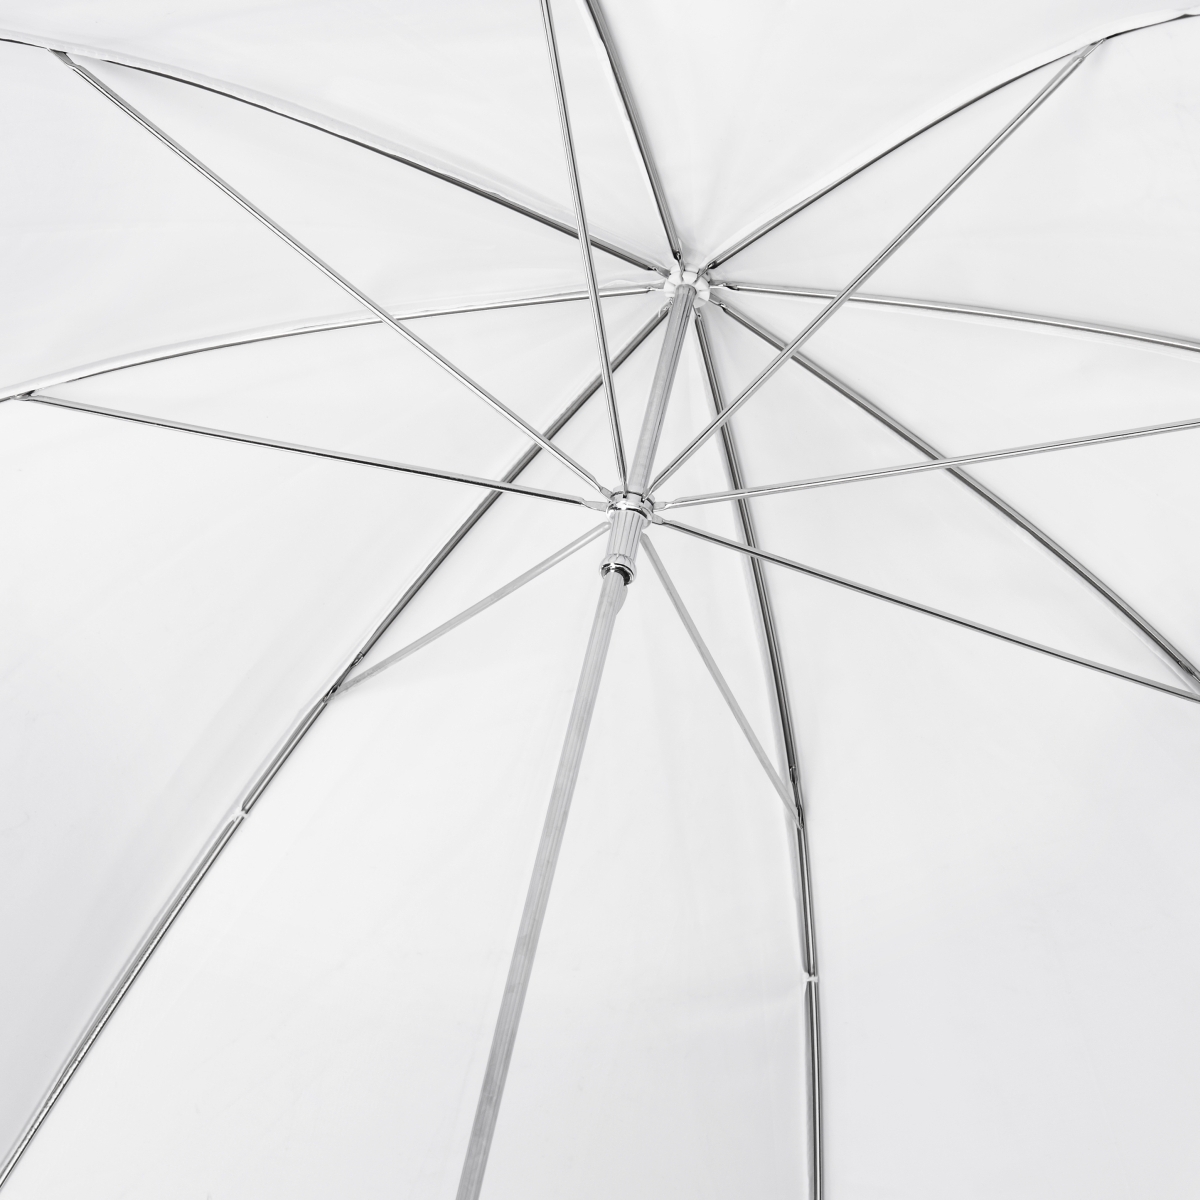 Walimex 2in1 Reflex & Transl. Umbrella white 109cm